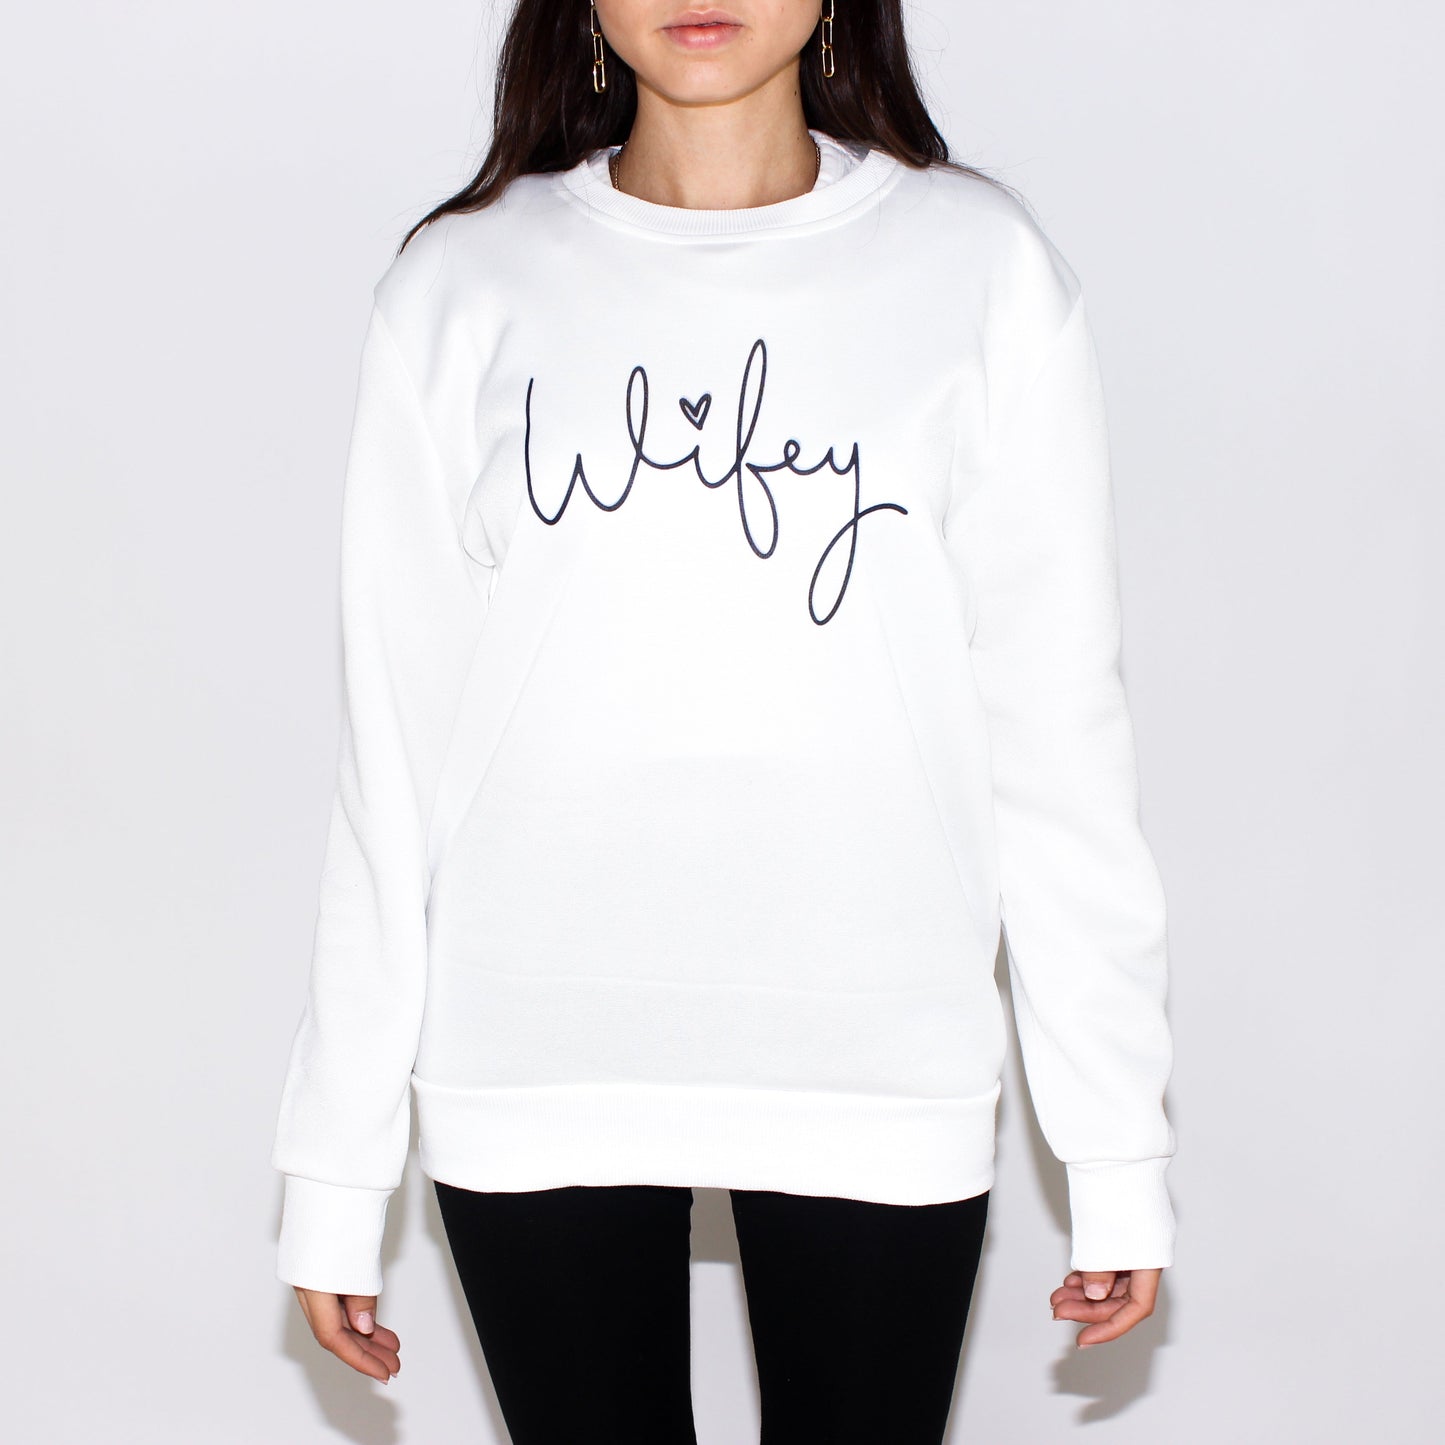 Wifey white hoodie